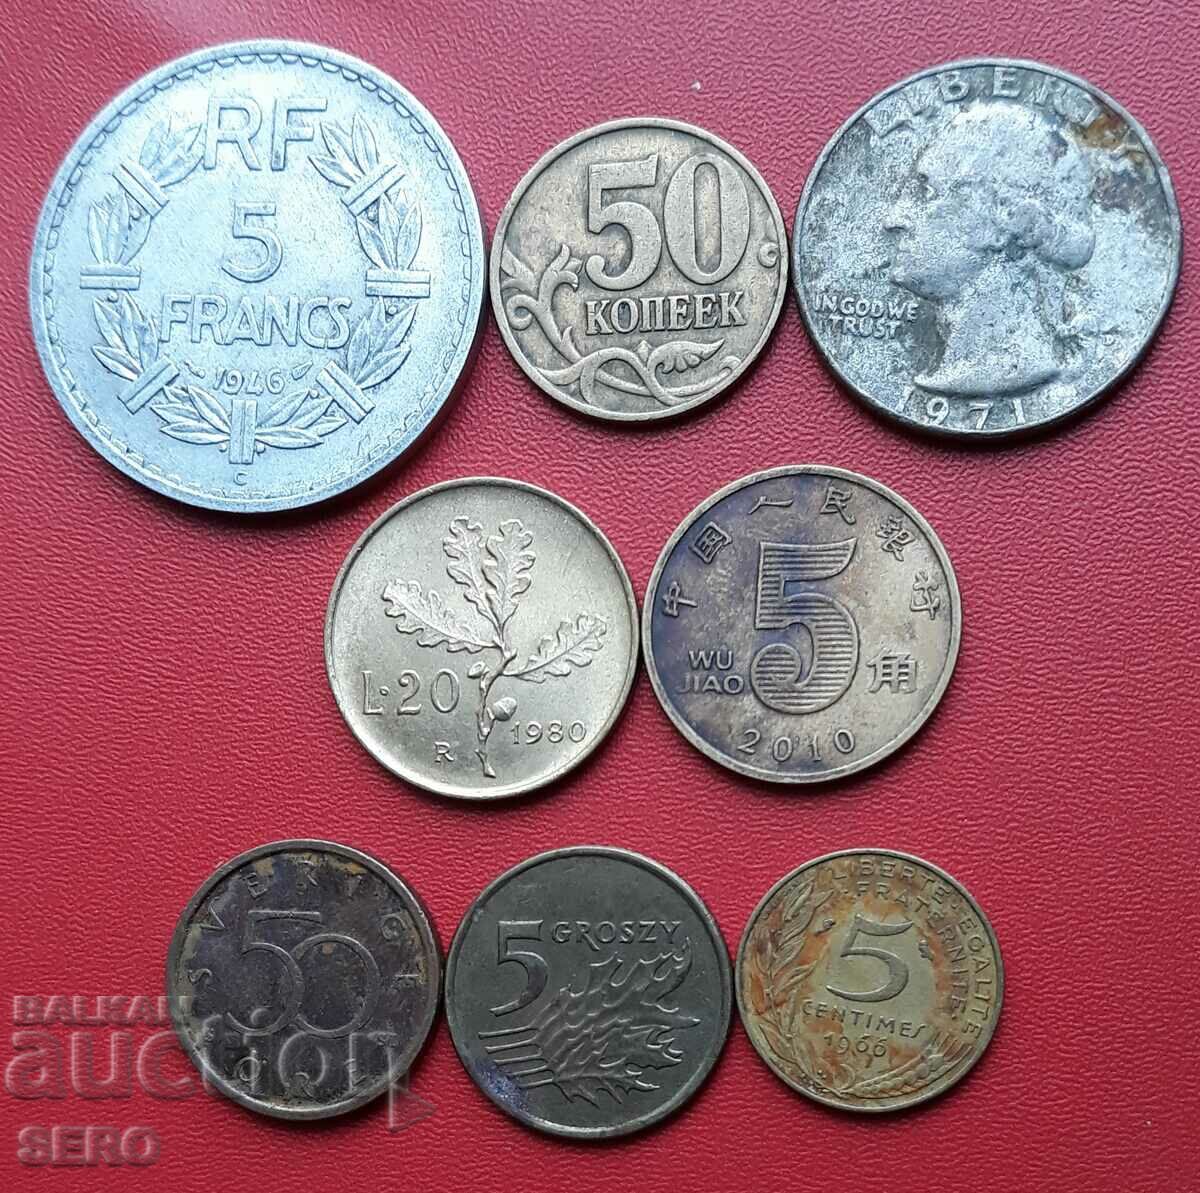 Lot mixt de 8 monede